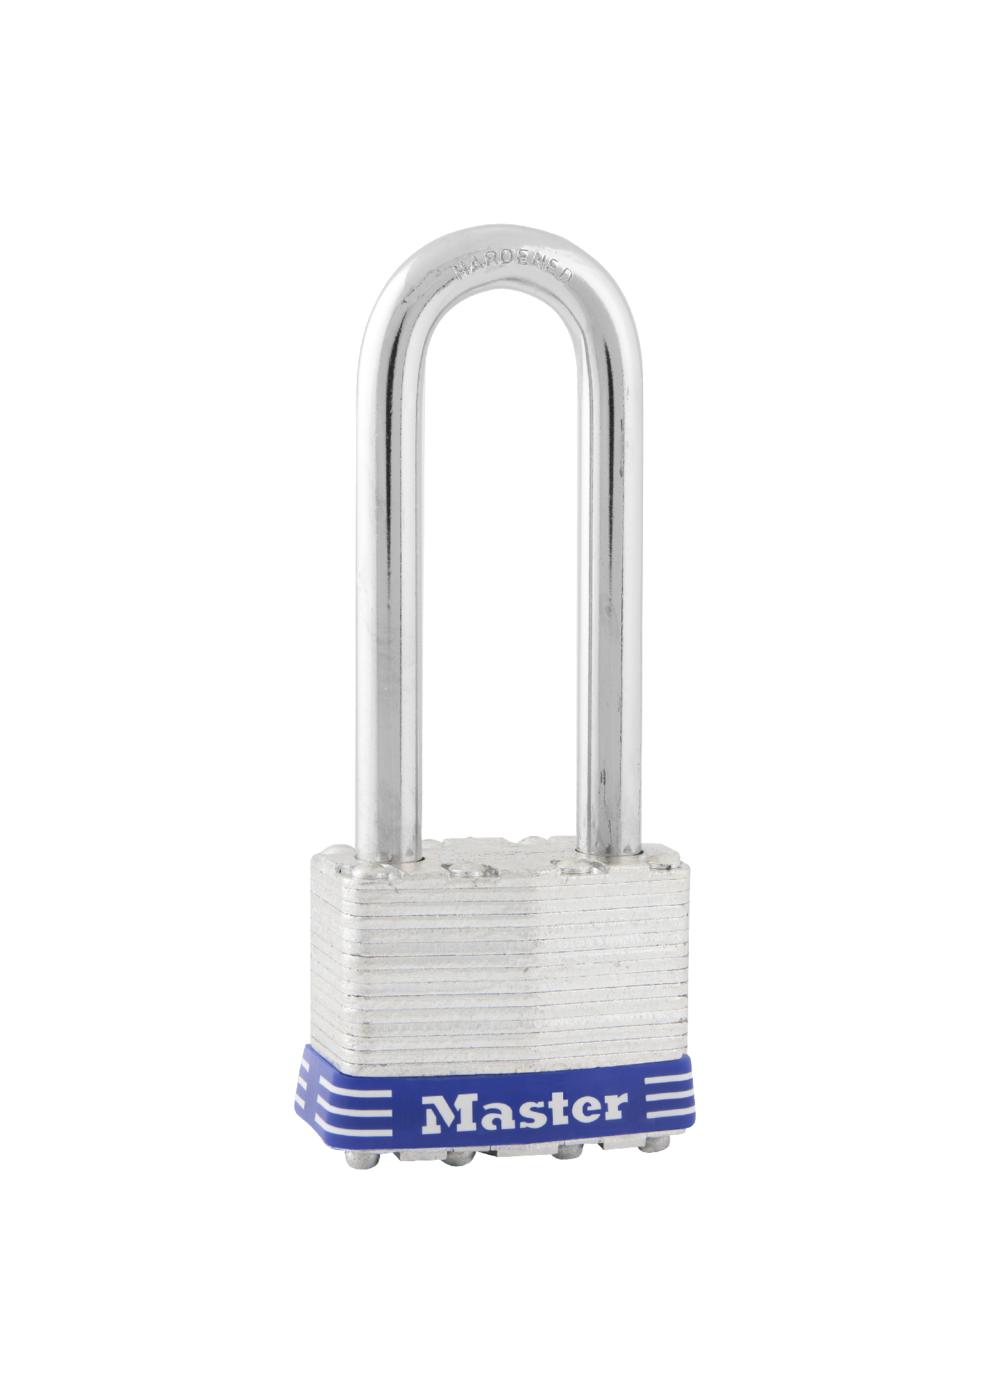 Master Lock Long Shank Padlock With Keys - Shop Locks & Keys at H-E-B